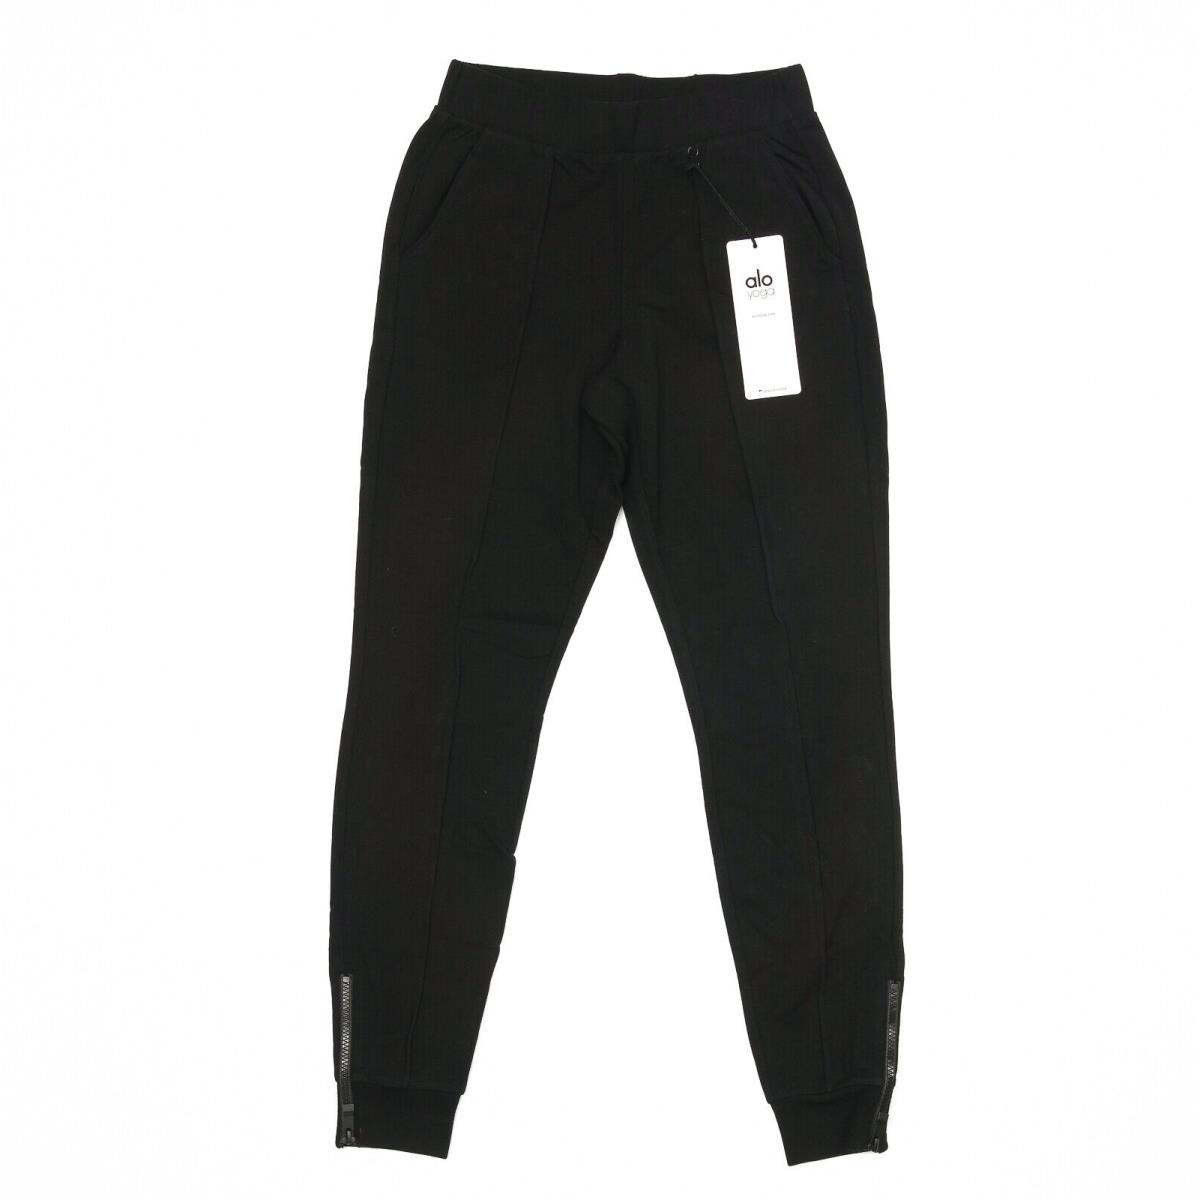 Alo Yoga Propel Black Sweatpants - Size Small S